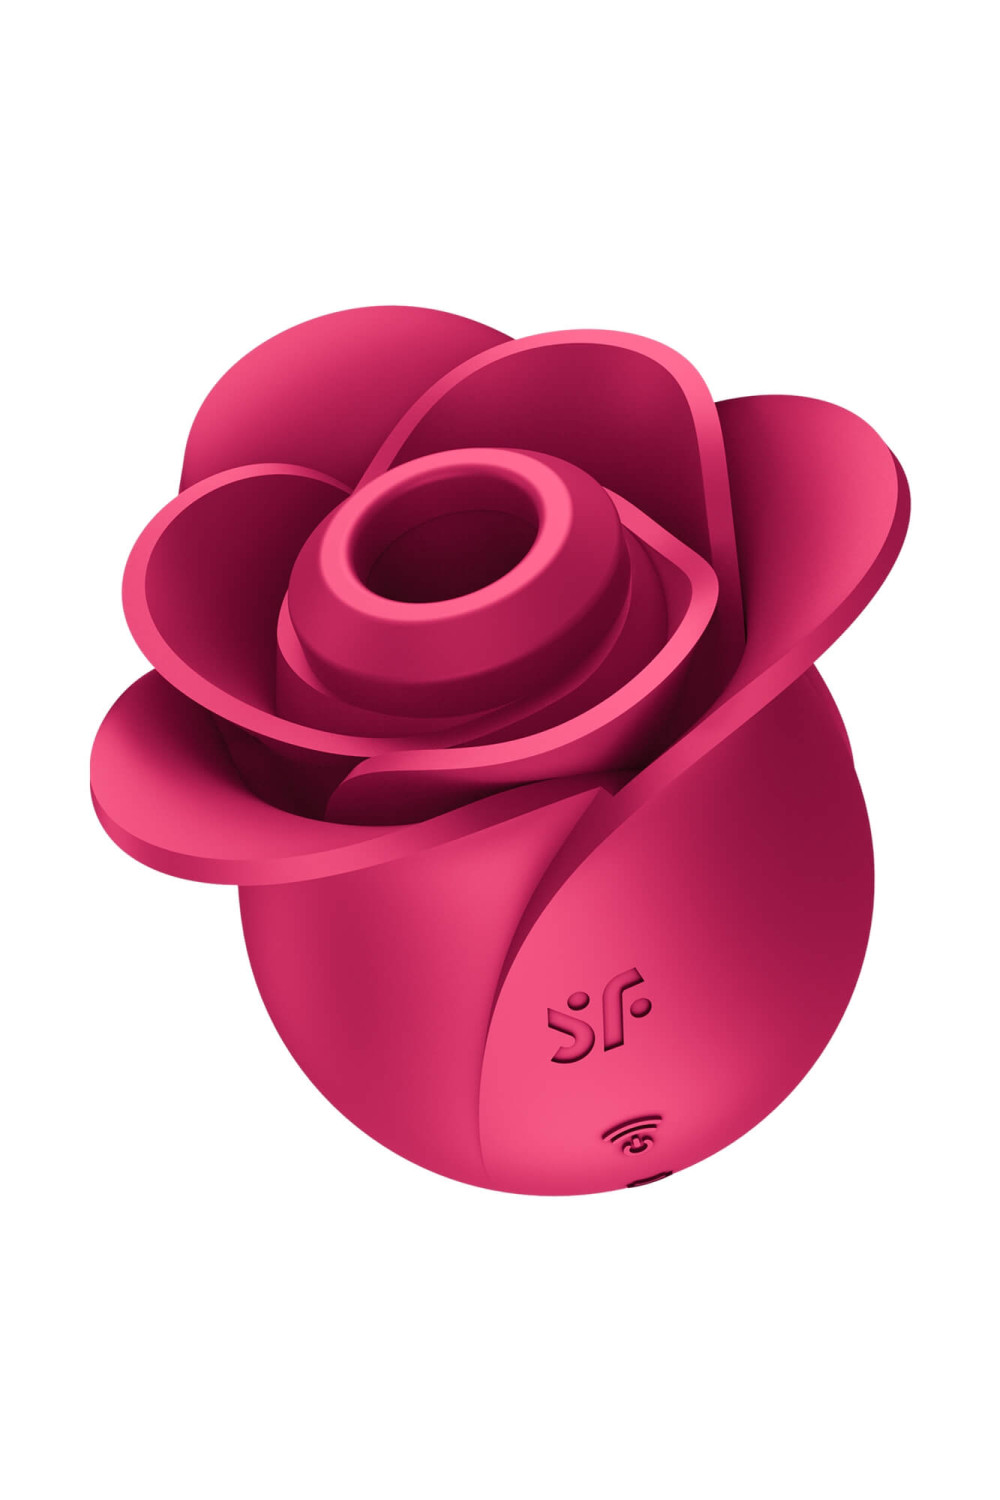 Satisfyer Pro 2 Rose Modern - akkus léghullámos csiklóizgató (piros)